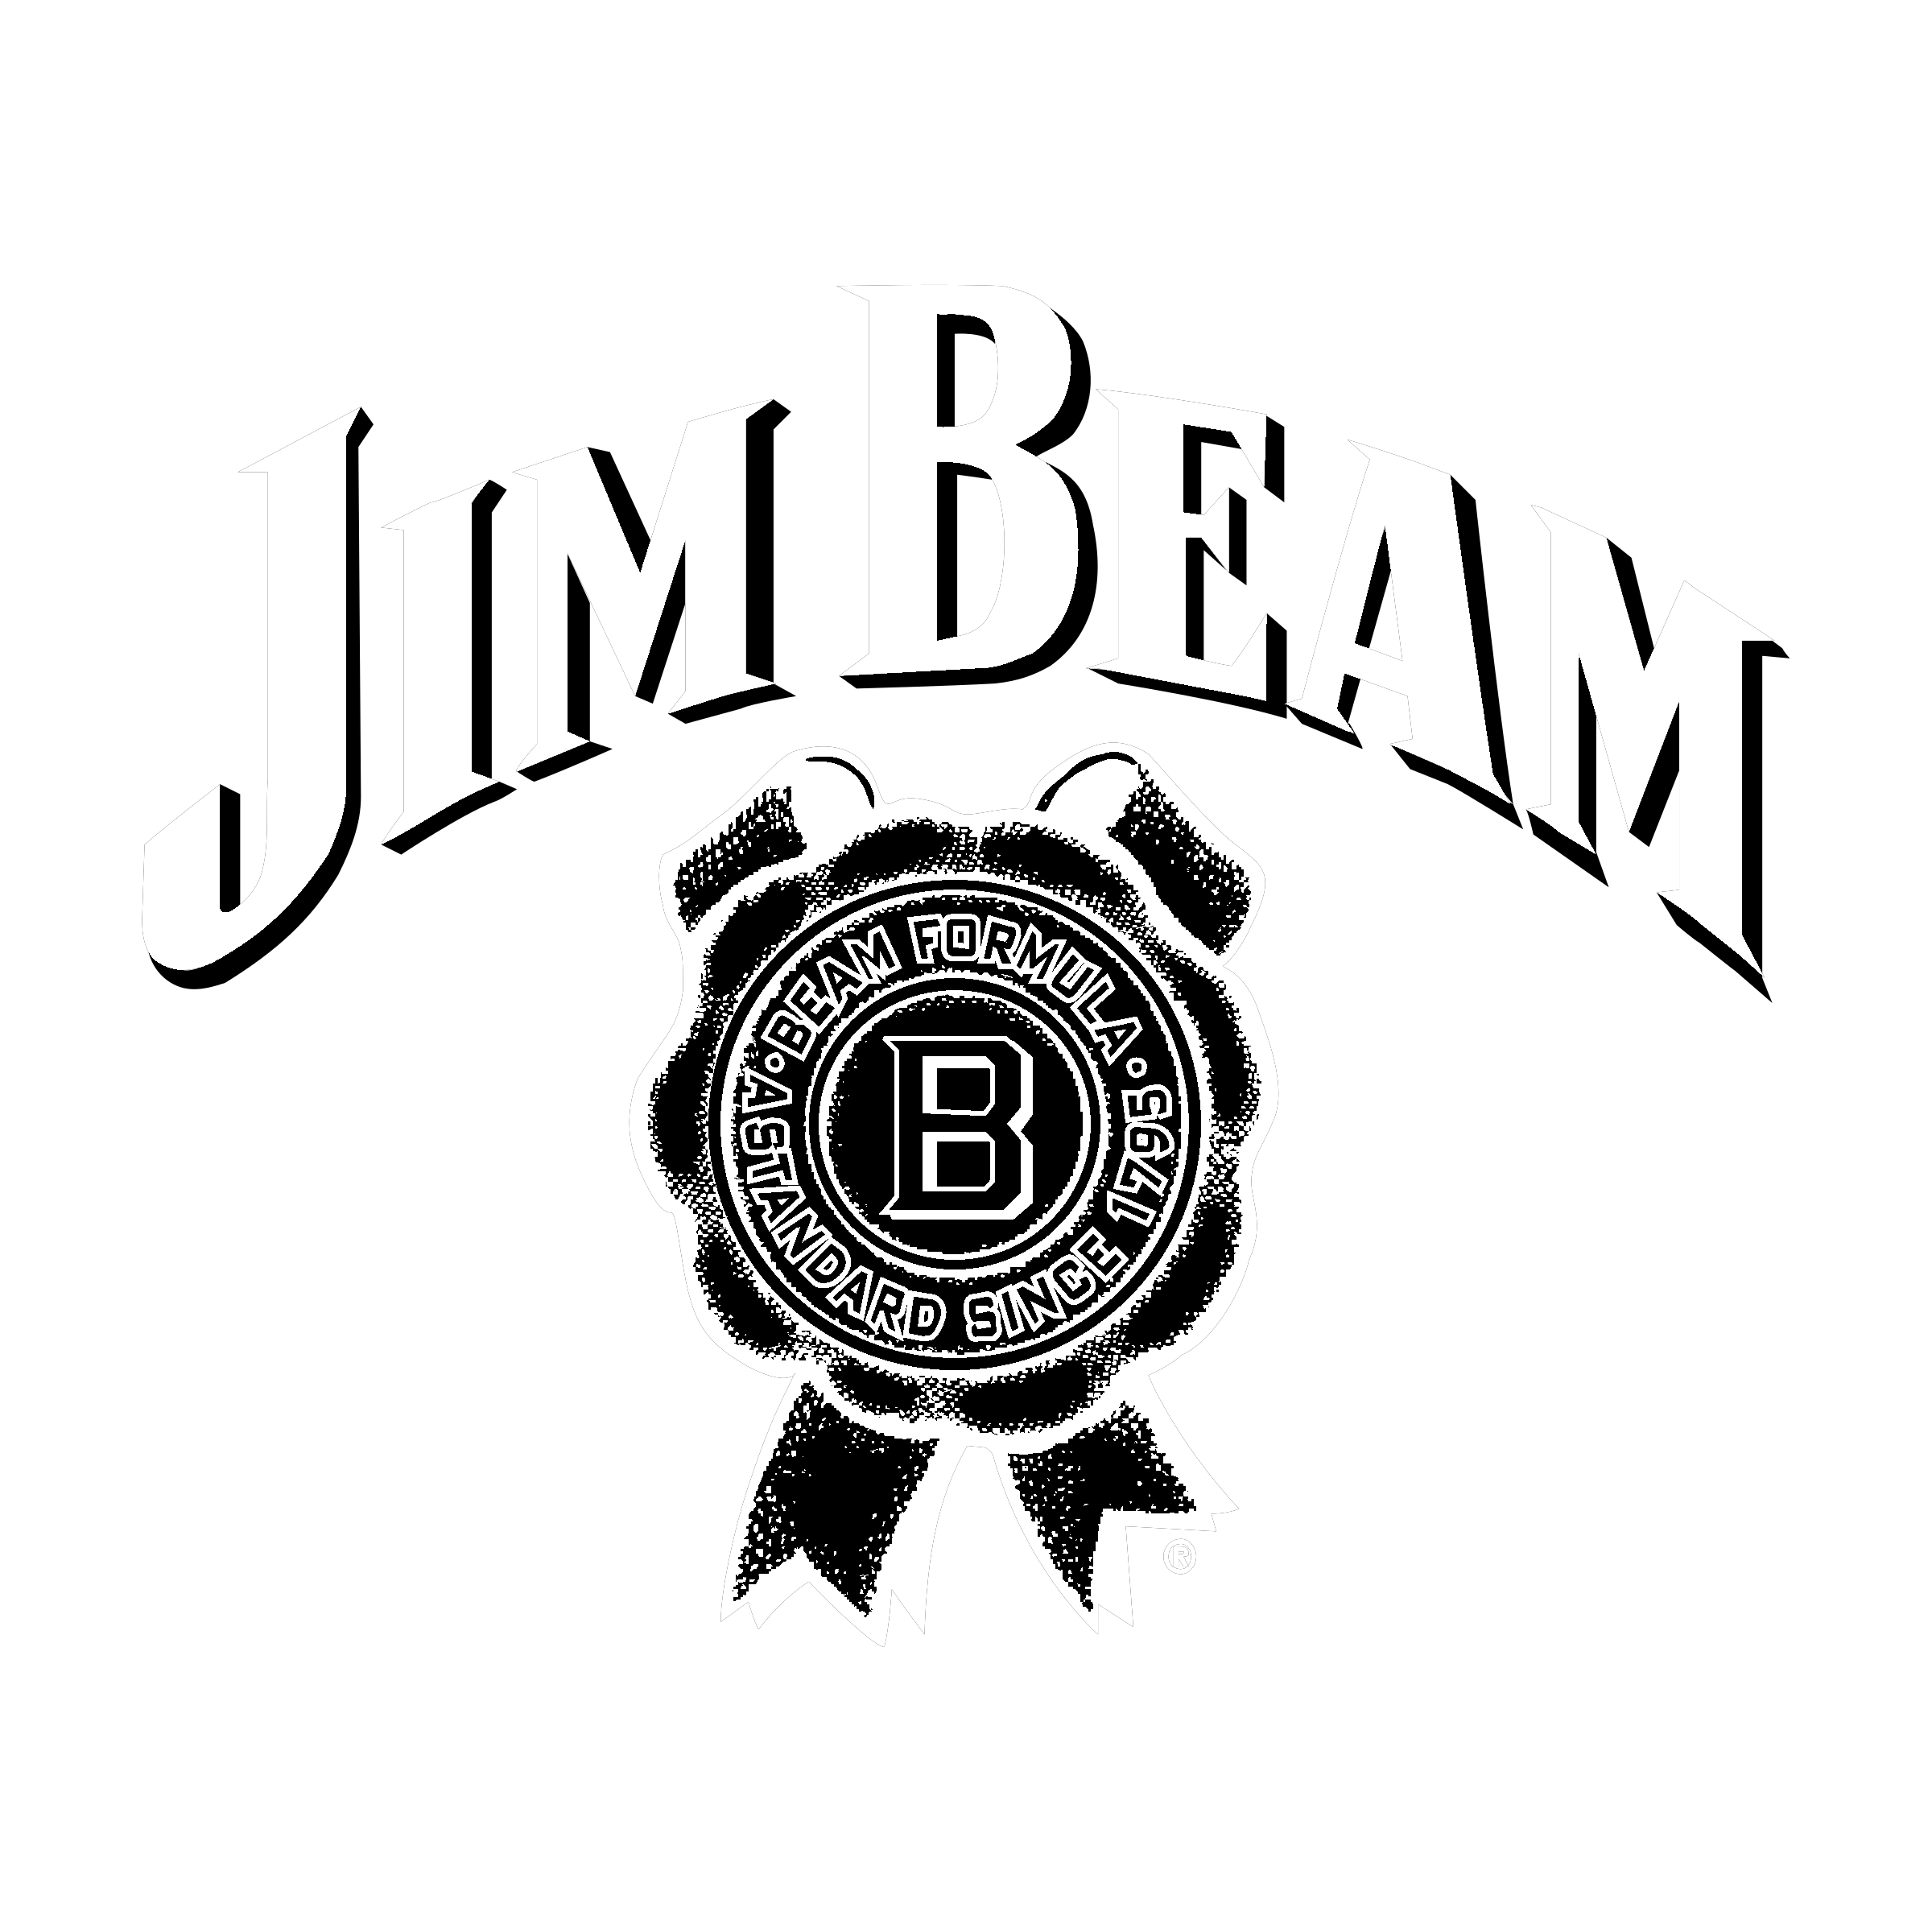 jim-beam-logo-black-and-white.png